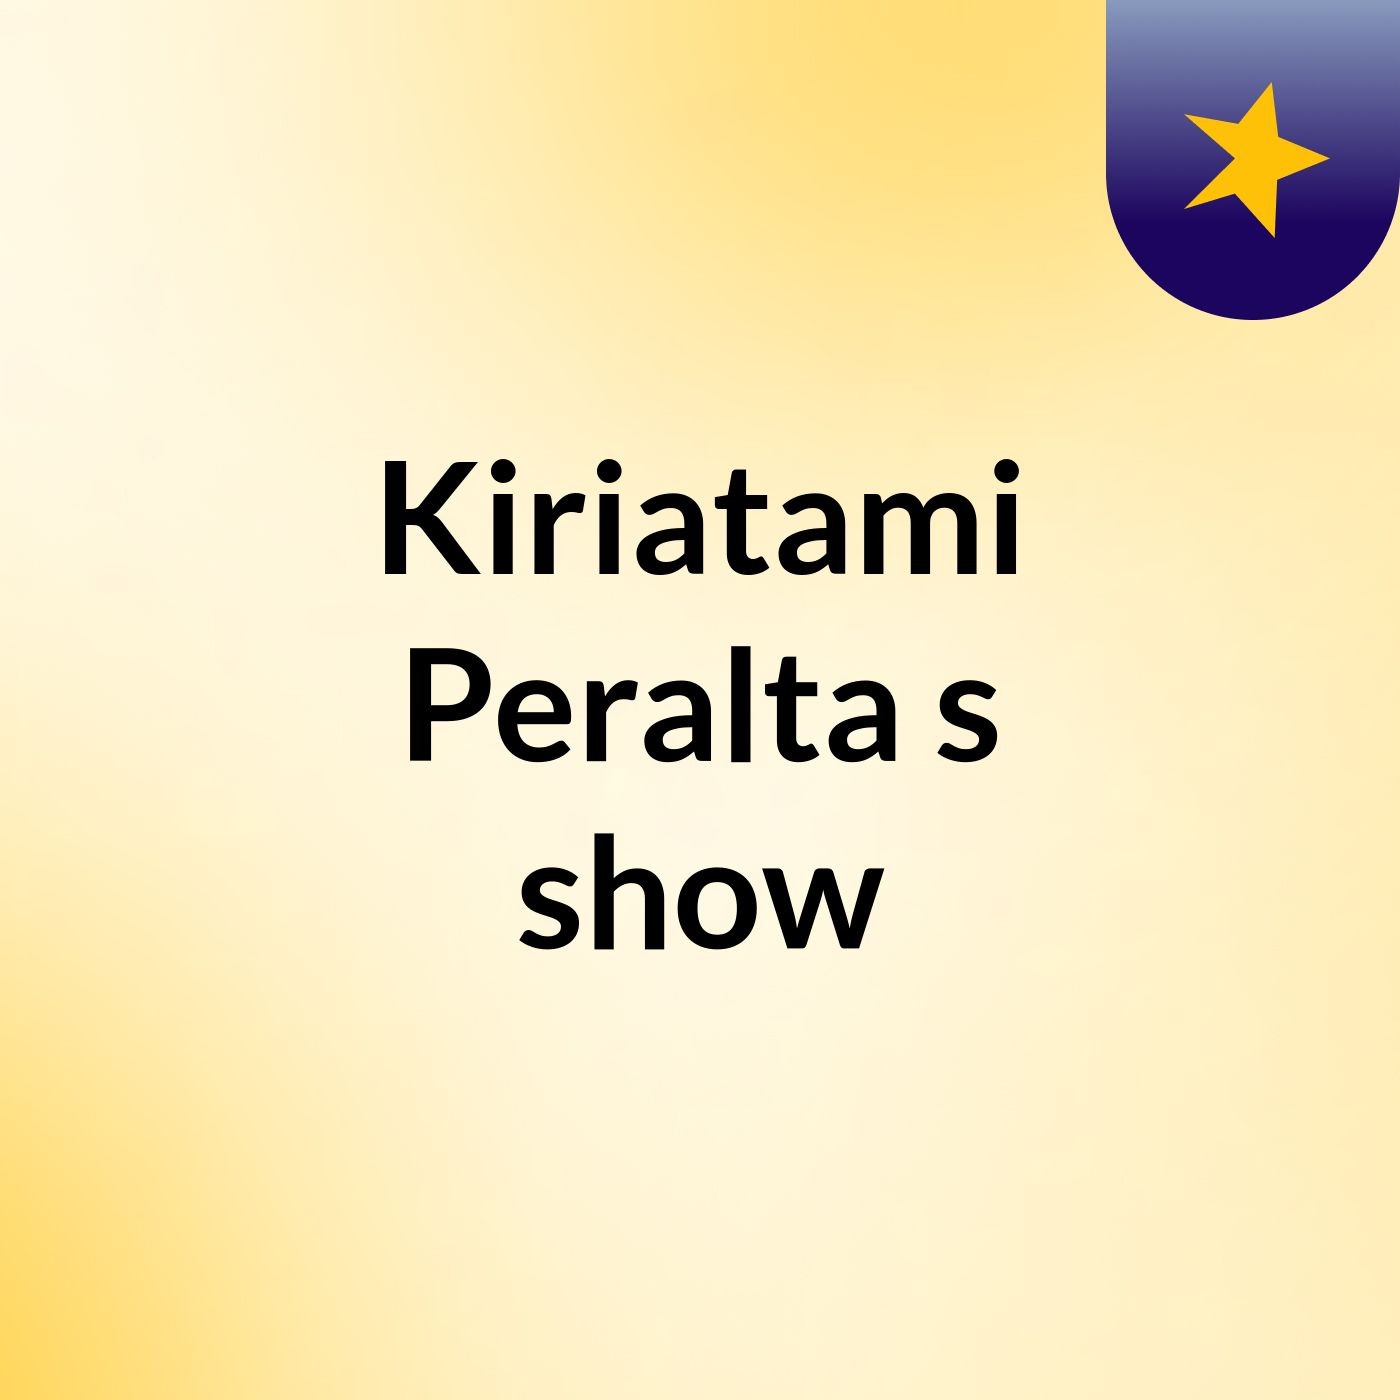 Kiriatami Peralta's show